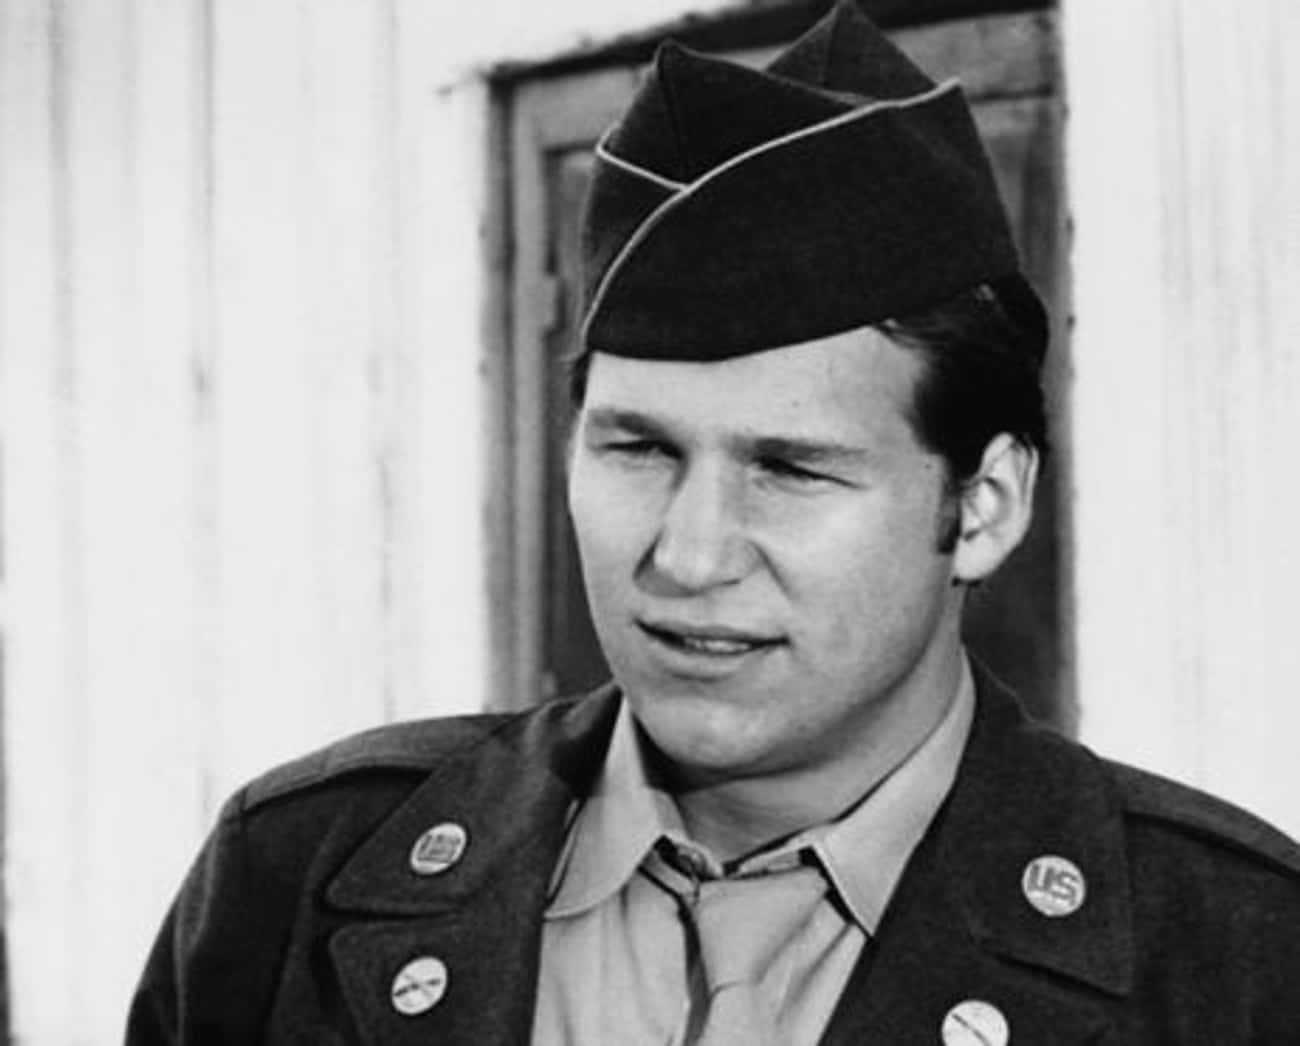 Young Jeff Bridges in a Military Uniform